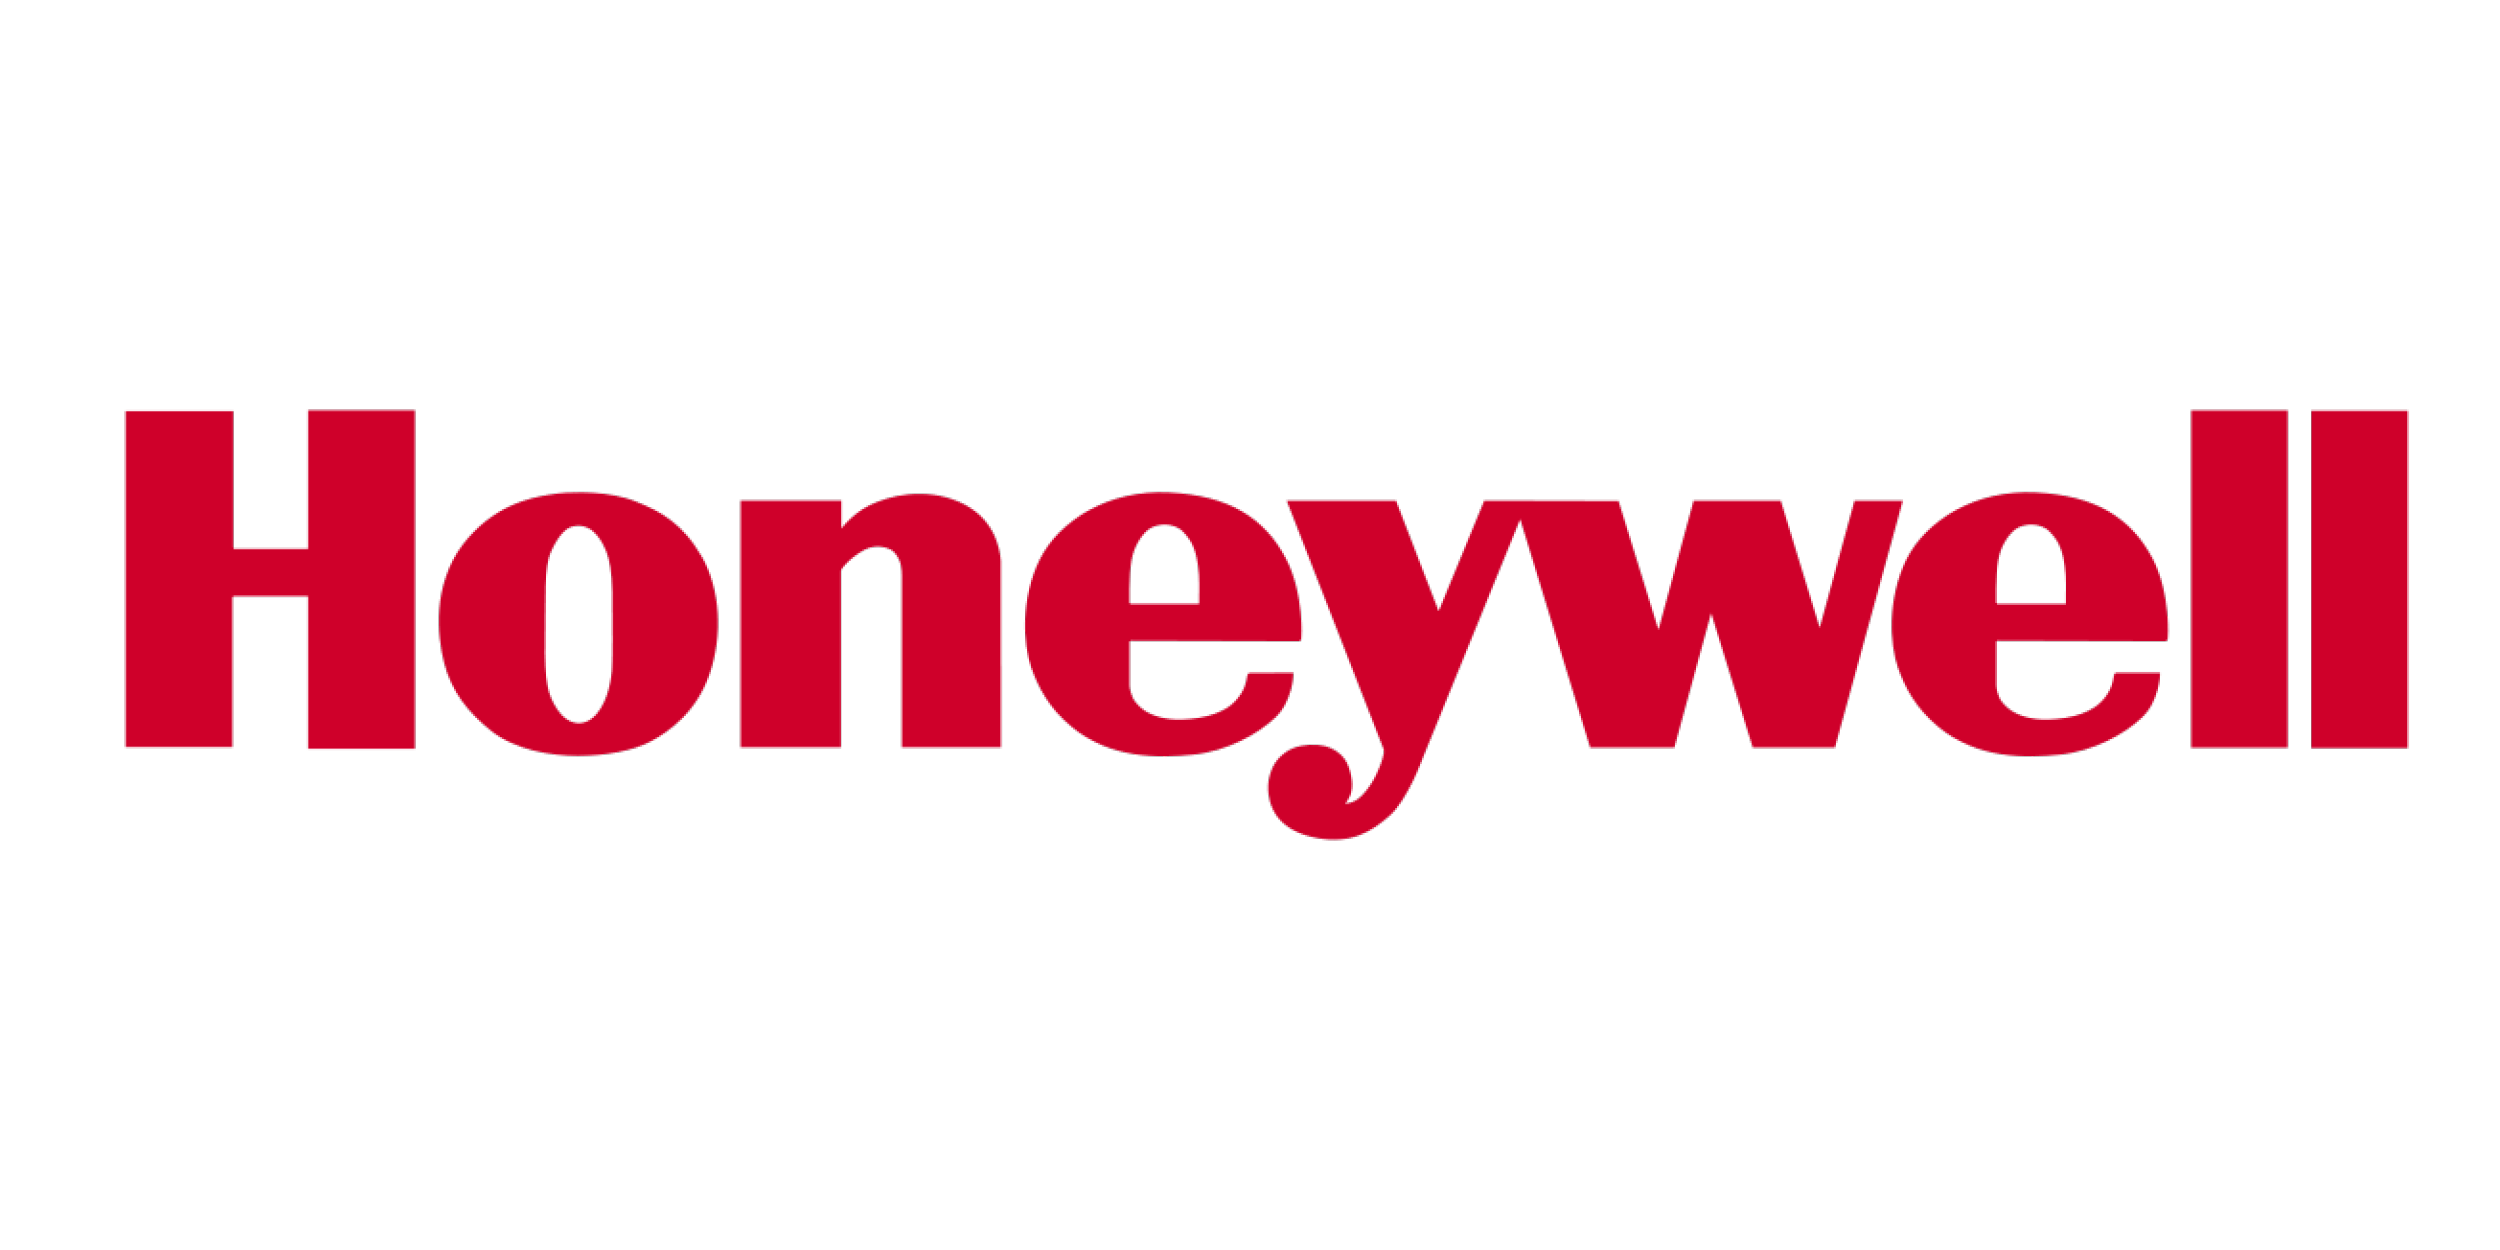 north carolina companies fortune 500 list - honeywell